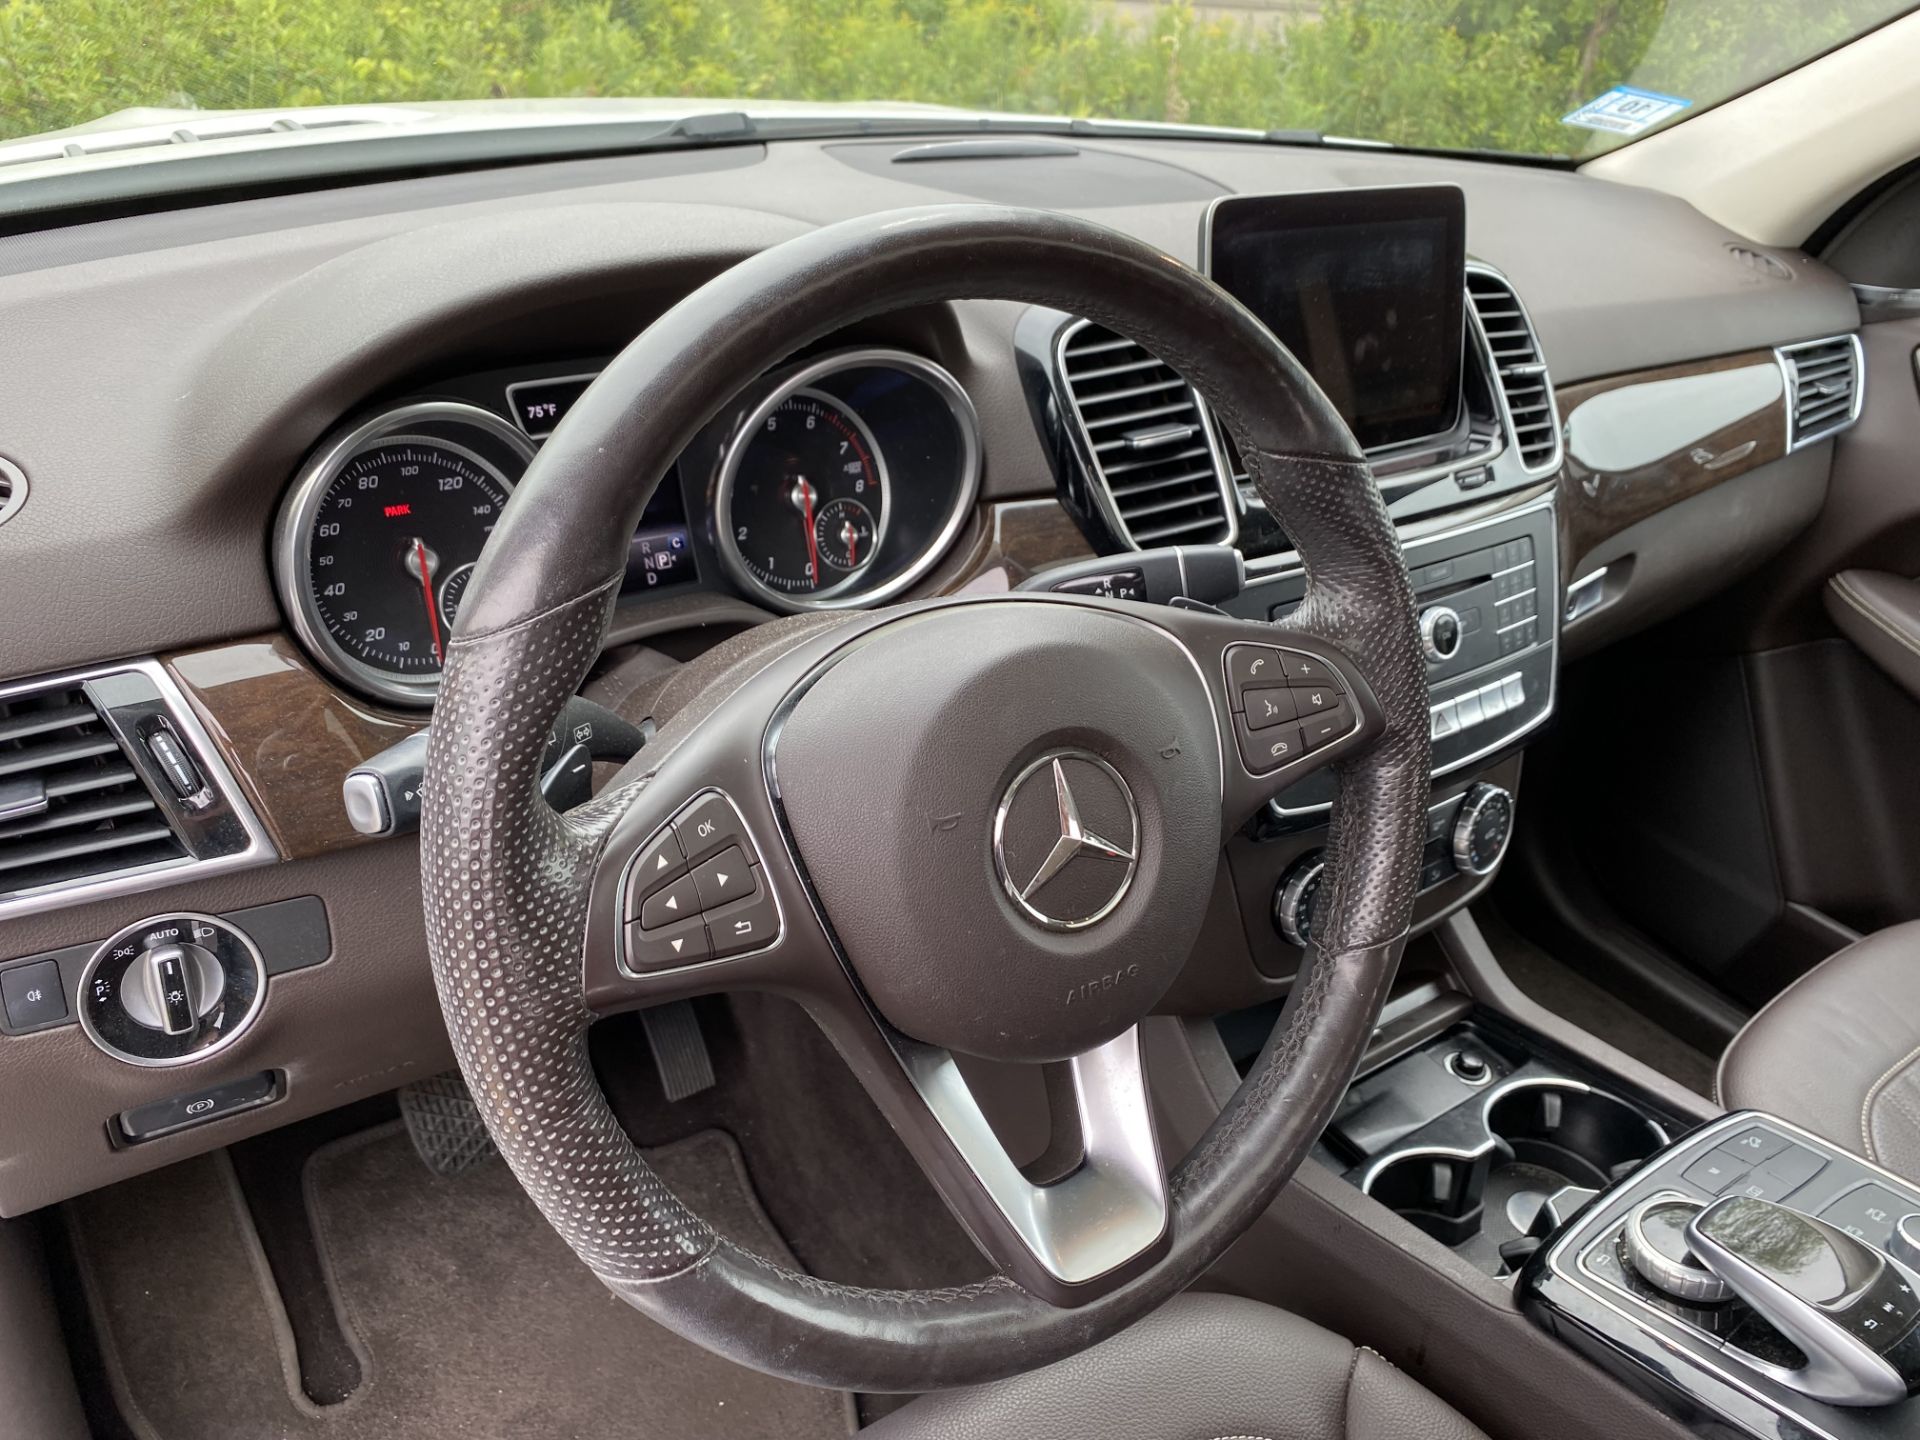 2018 Mercedes Benz GLE350, Odom: 52,420, VIN#: 4JGDA5HBXJB144786, Leather Interior, Power - Image 15 of 19